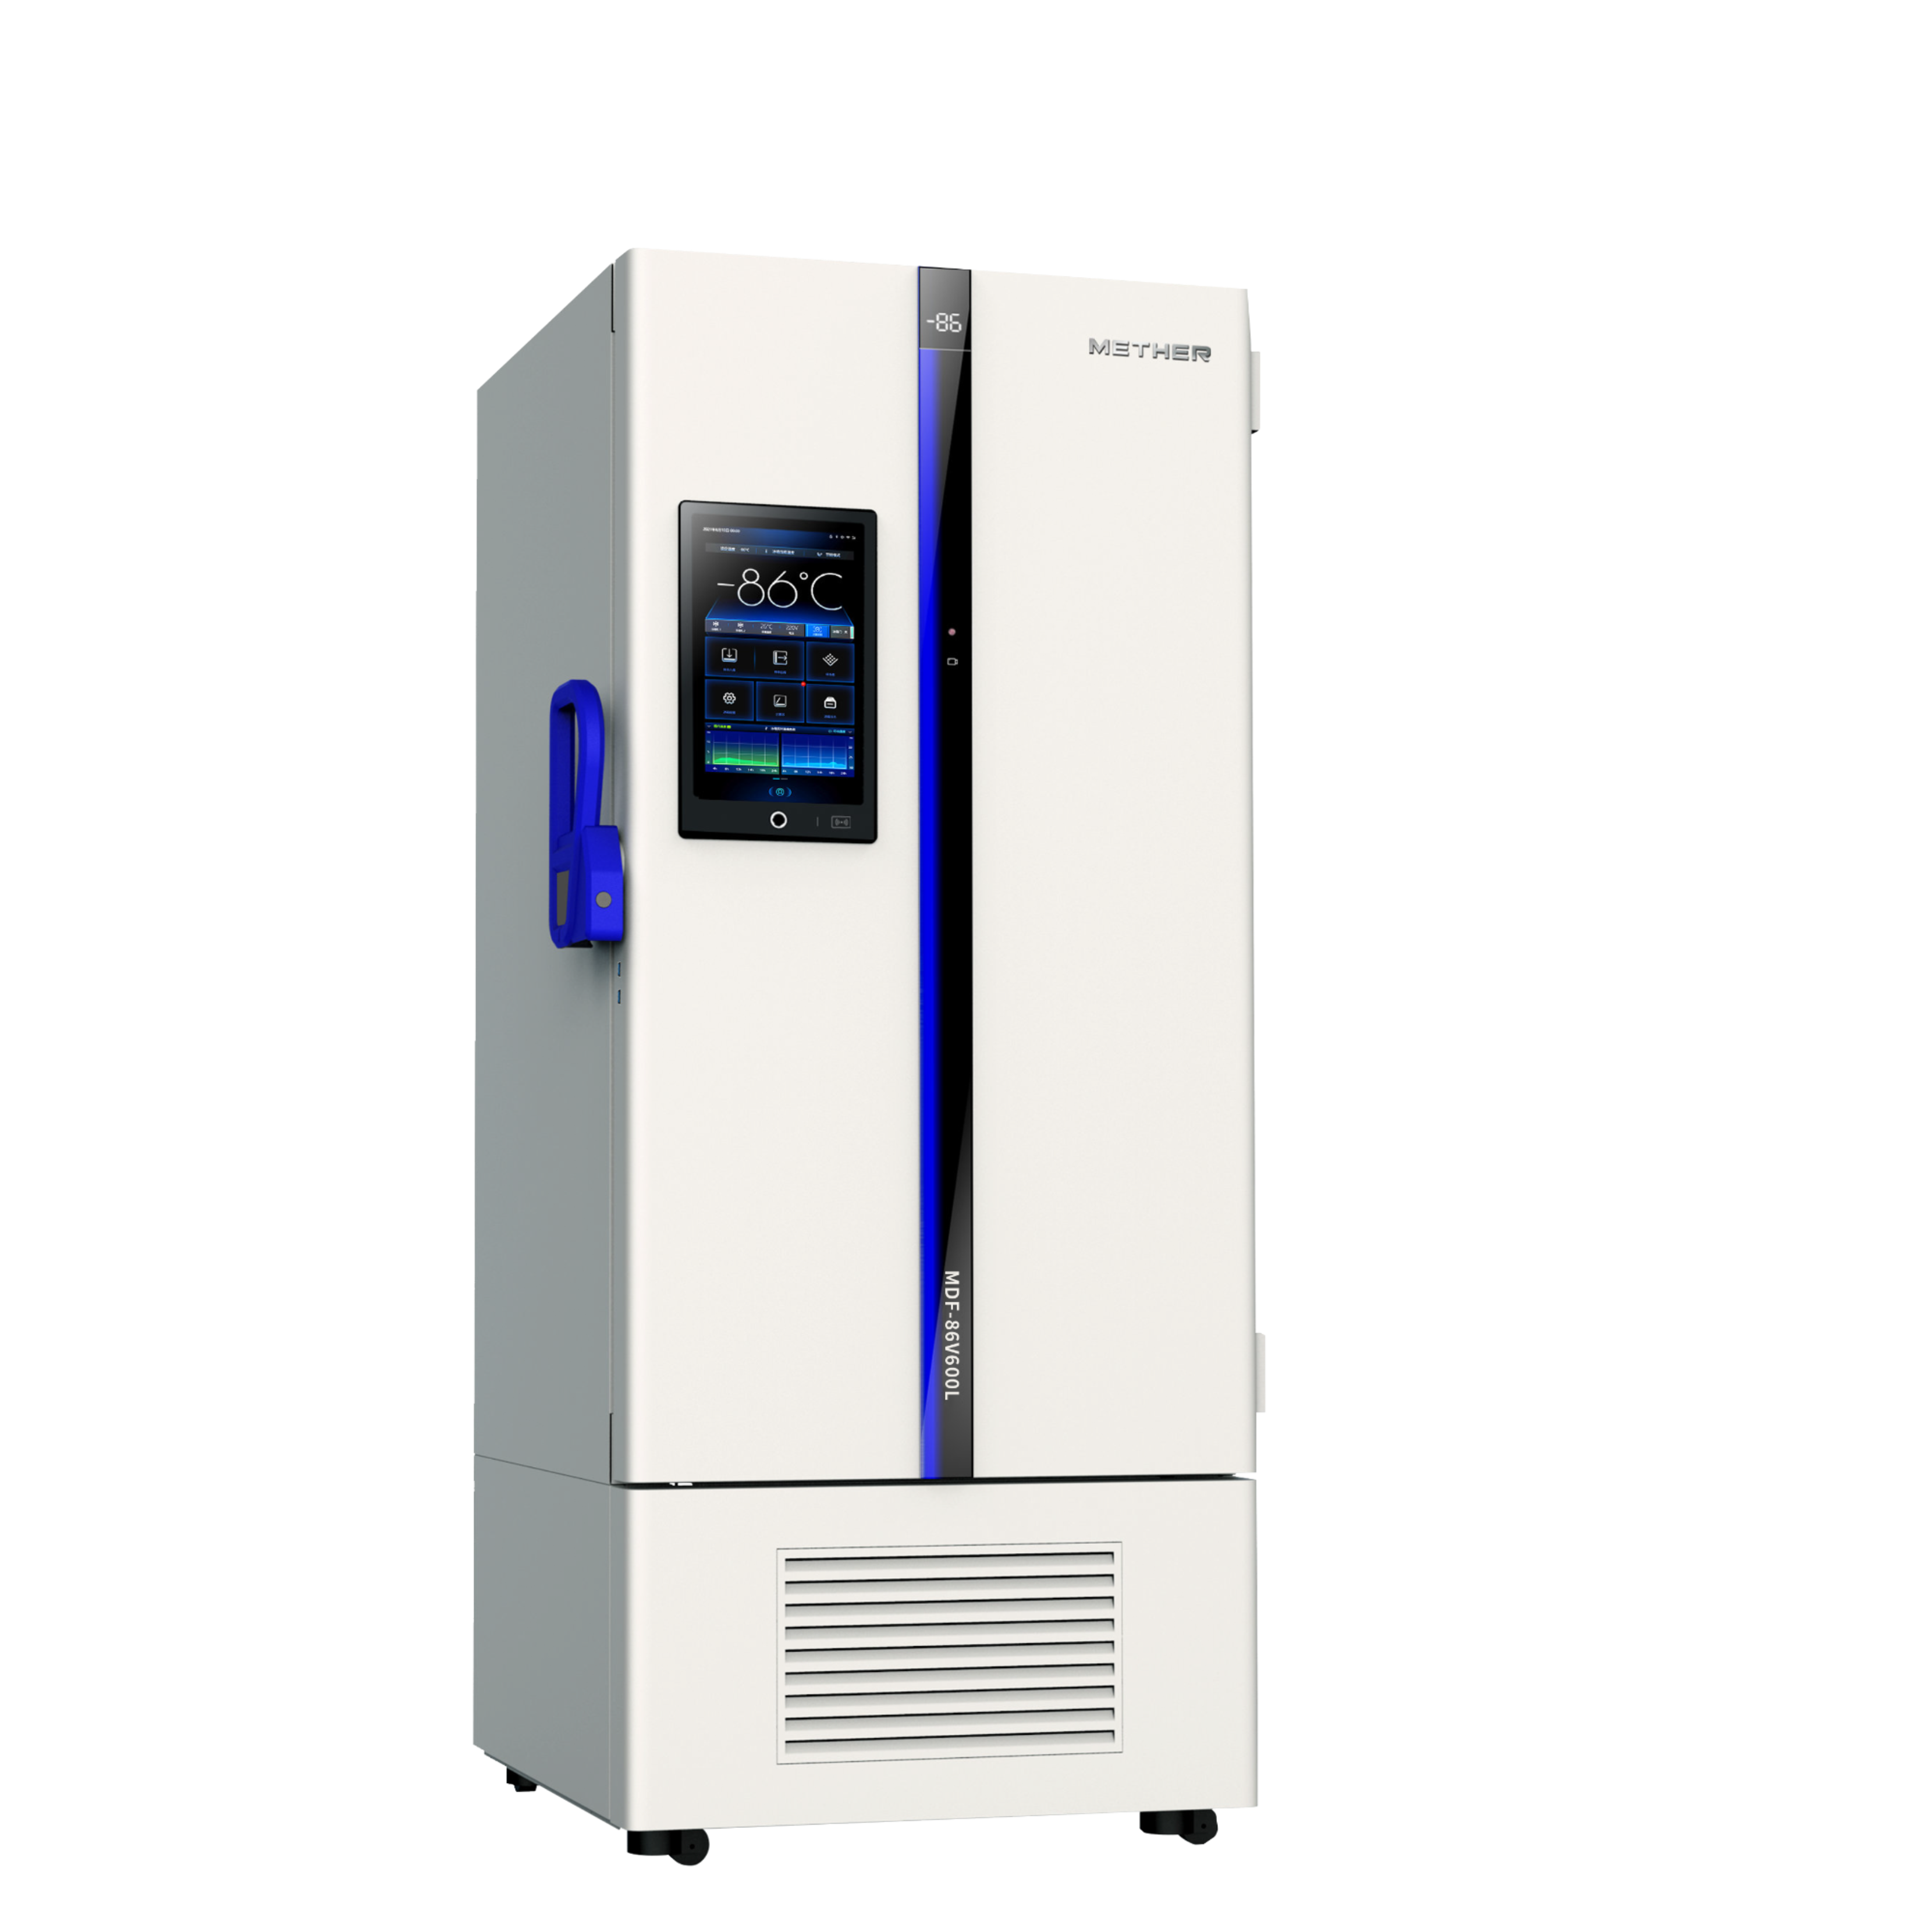 中科都菱MDF-86V600L超低温冰箱